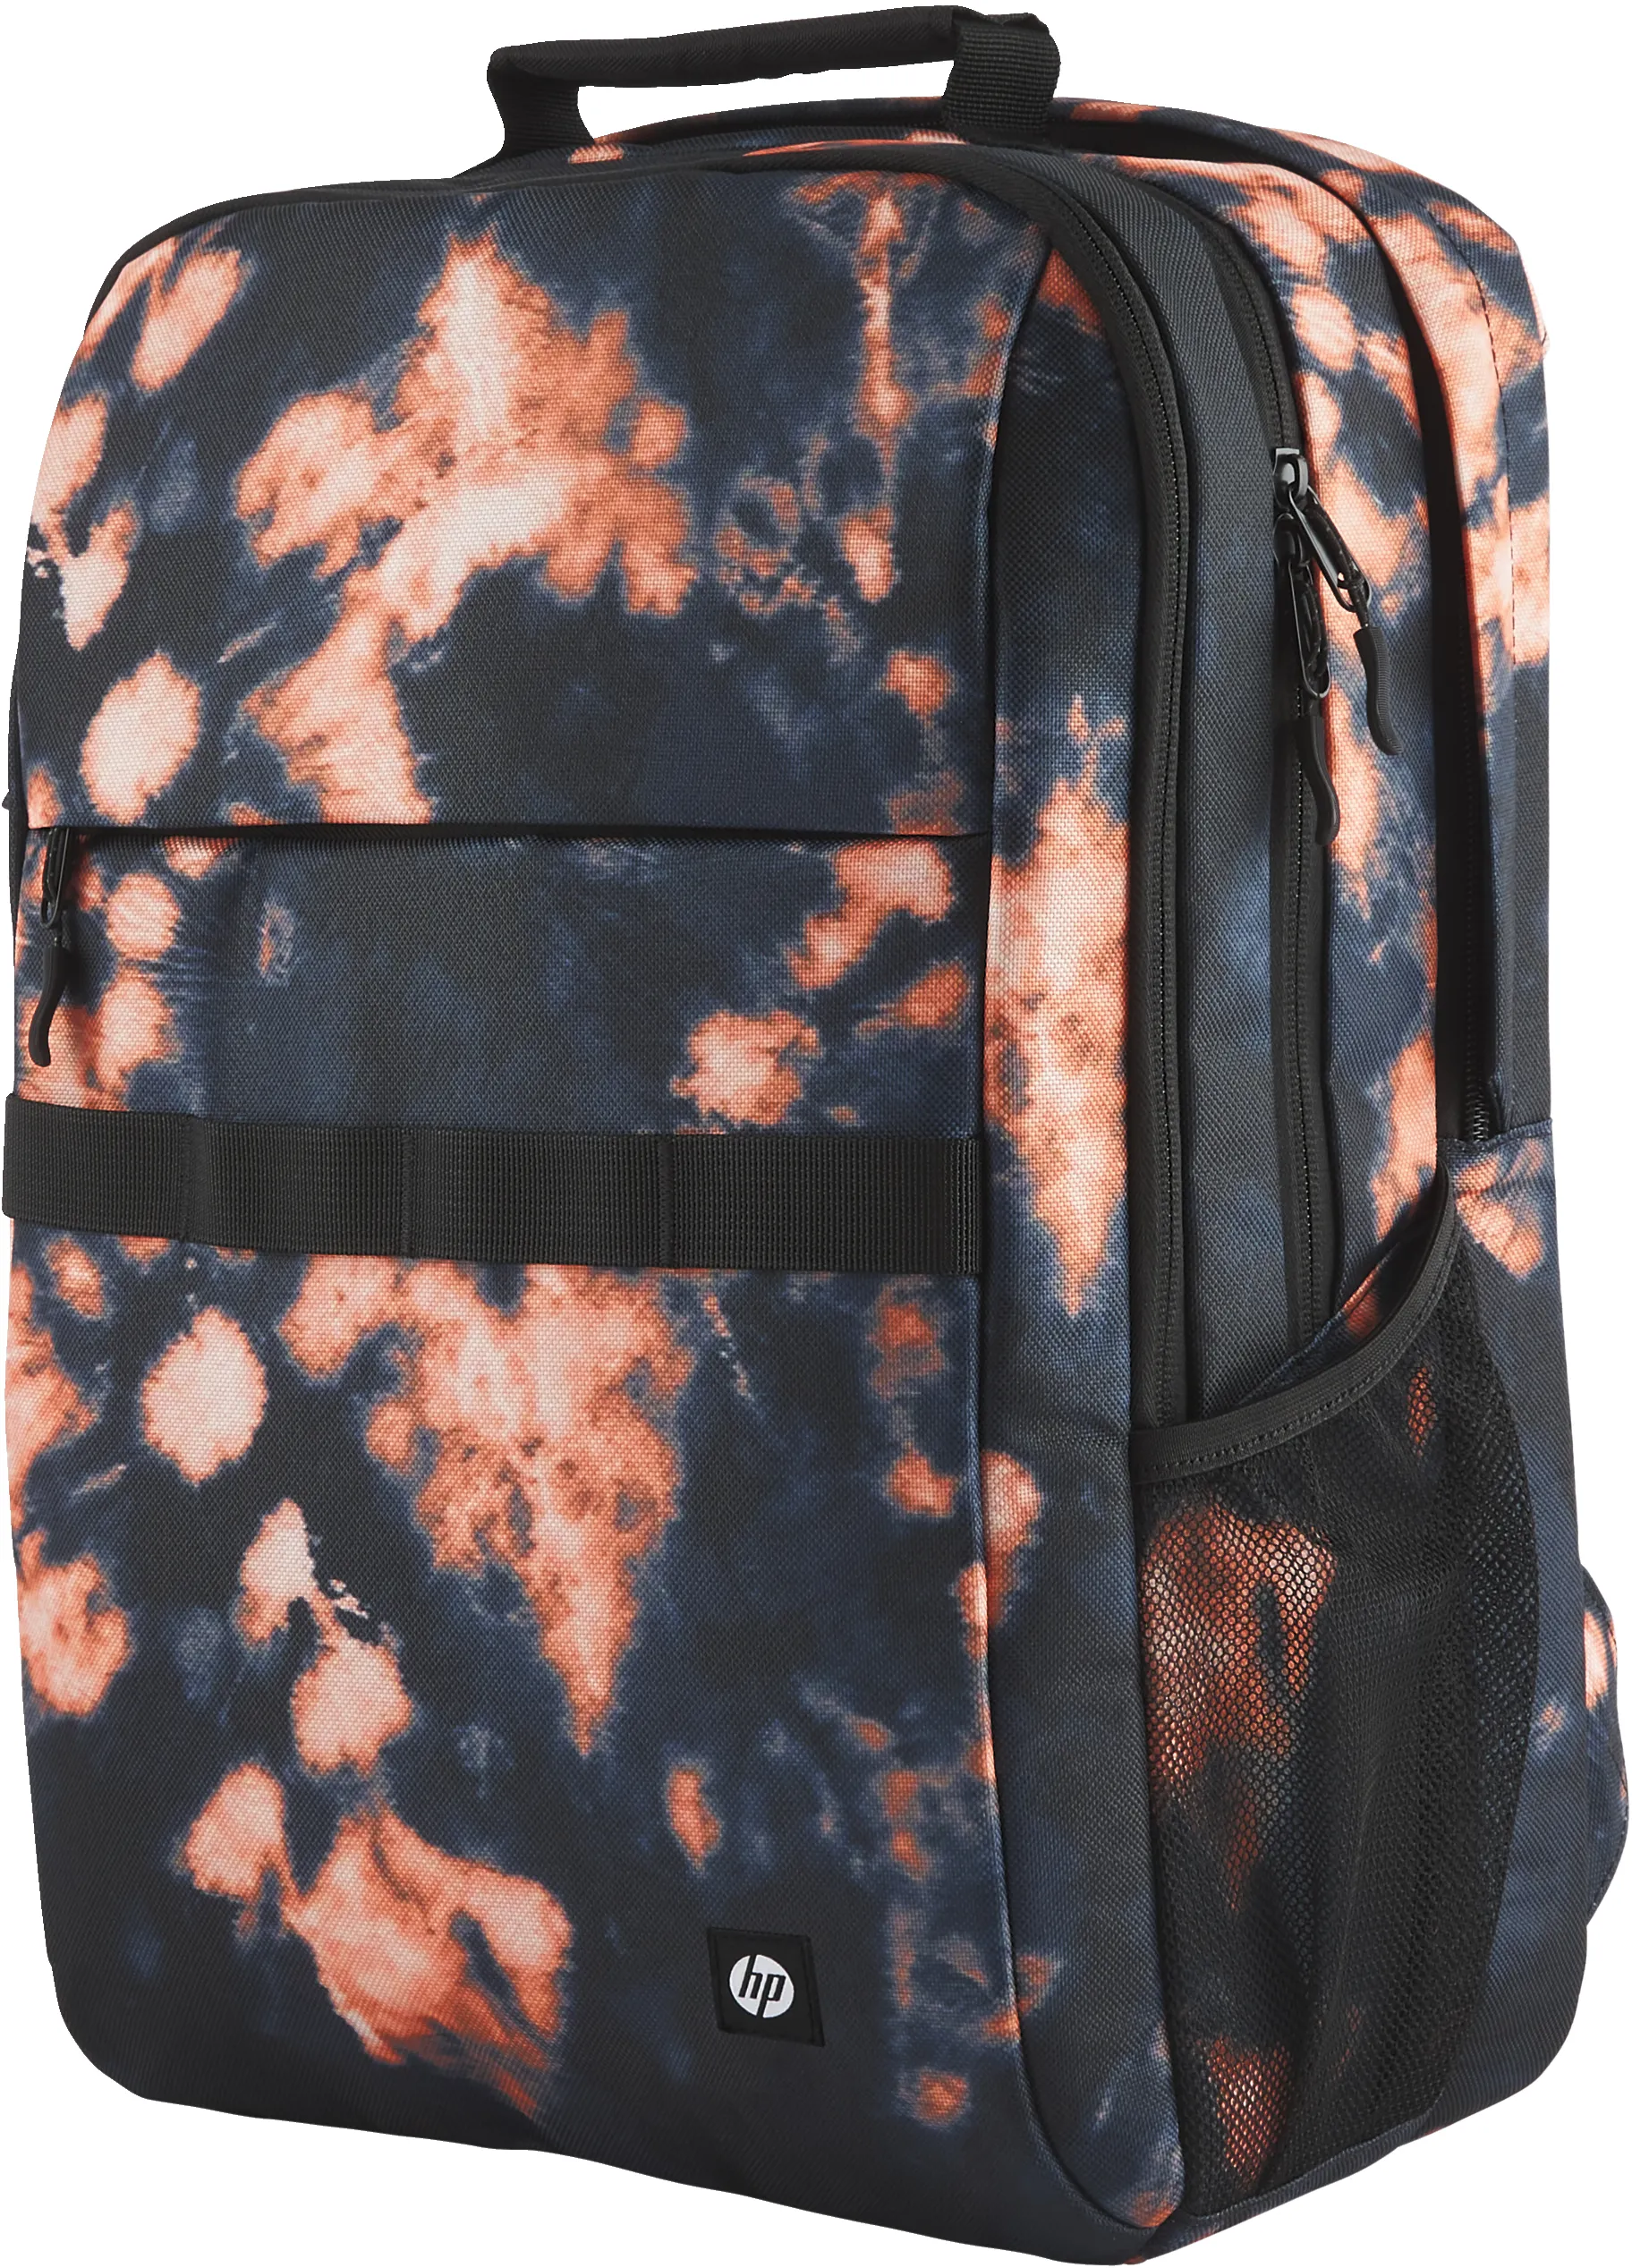 Vente HP Campus XL Tie Dye Backpack HP au meilleur prix - visuel 2